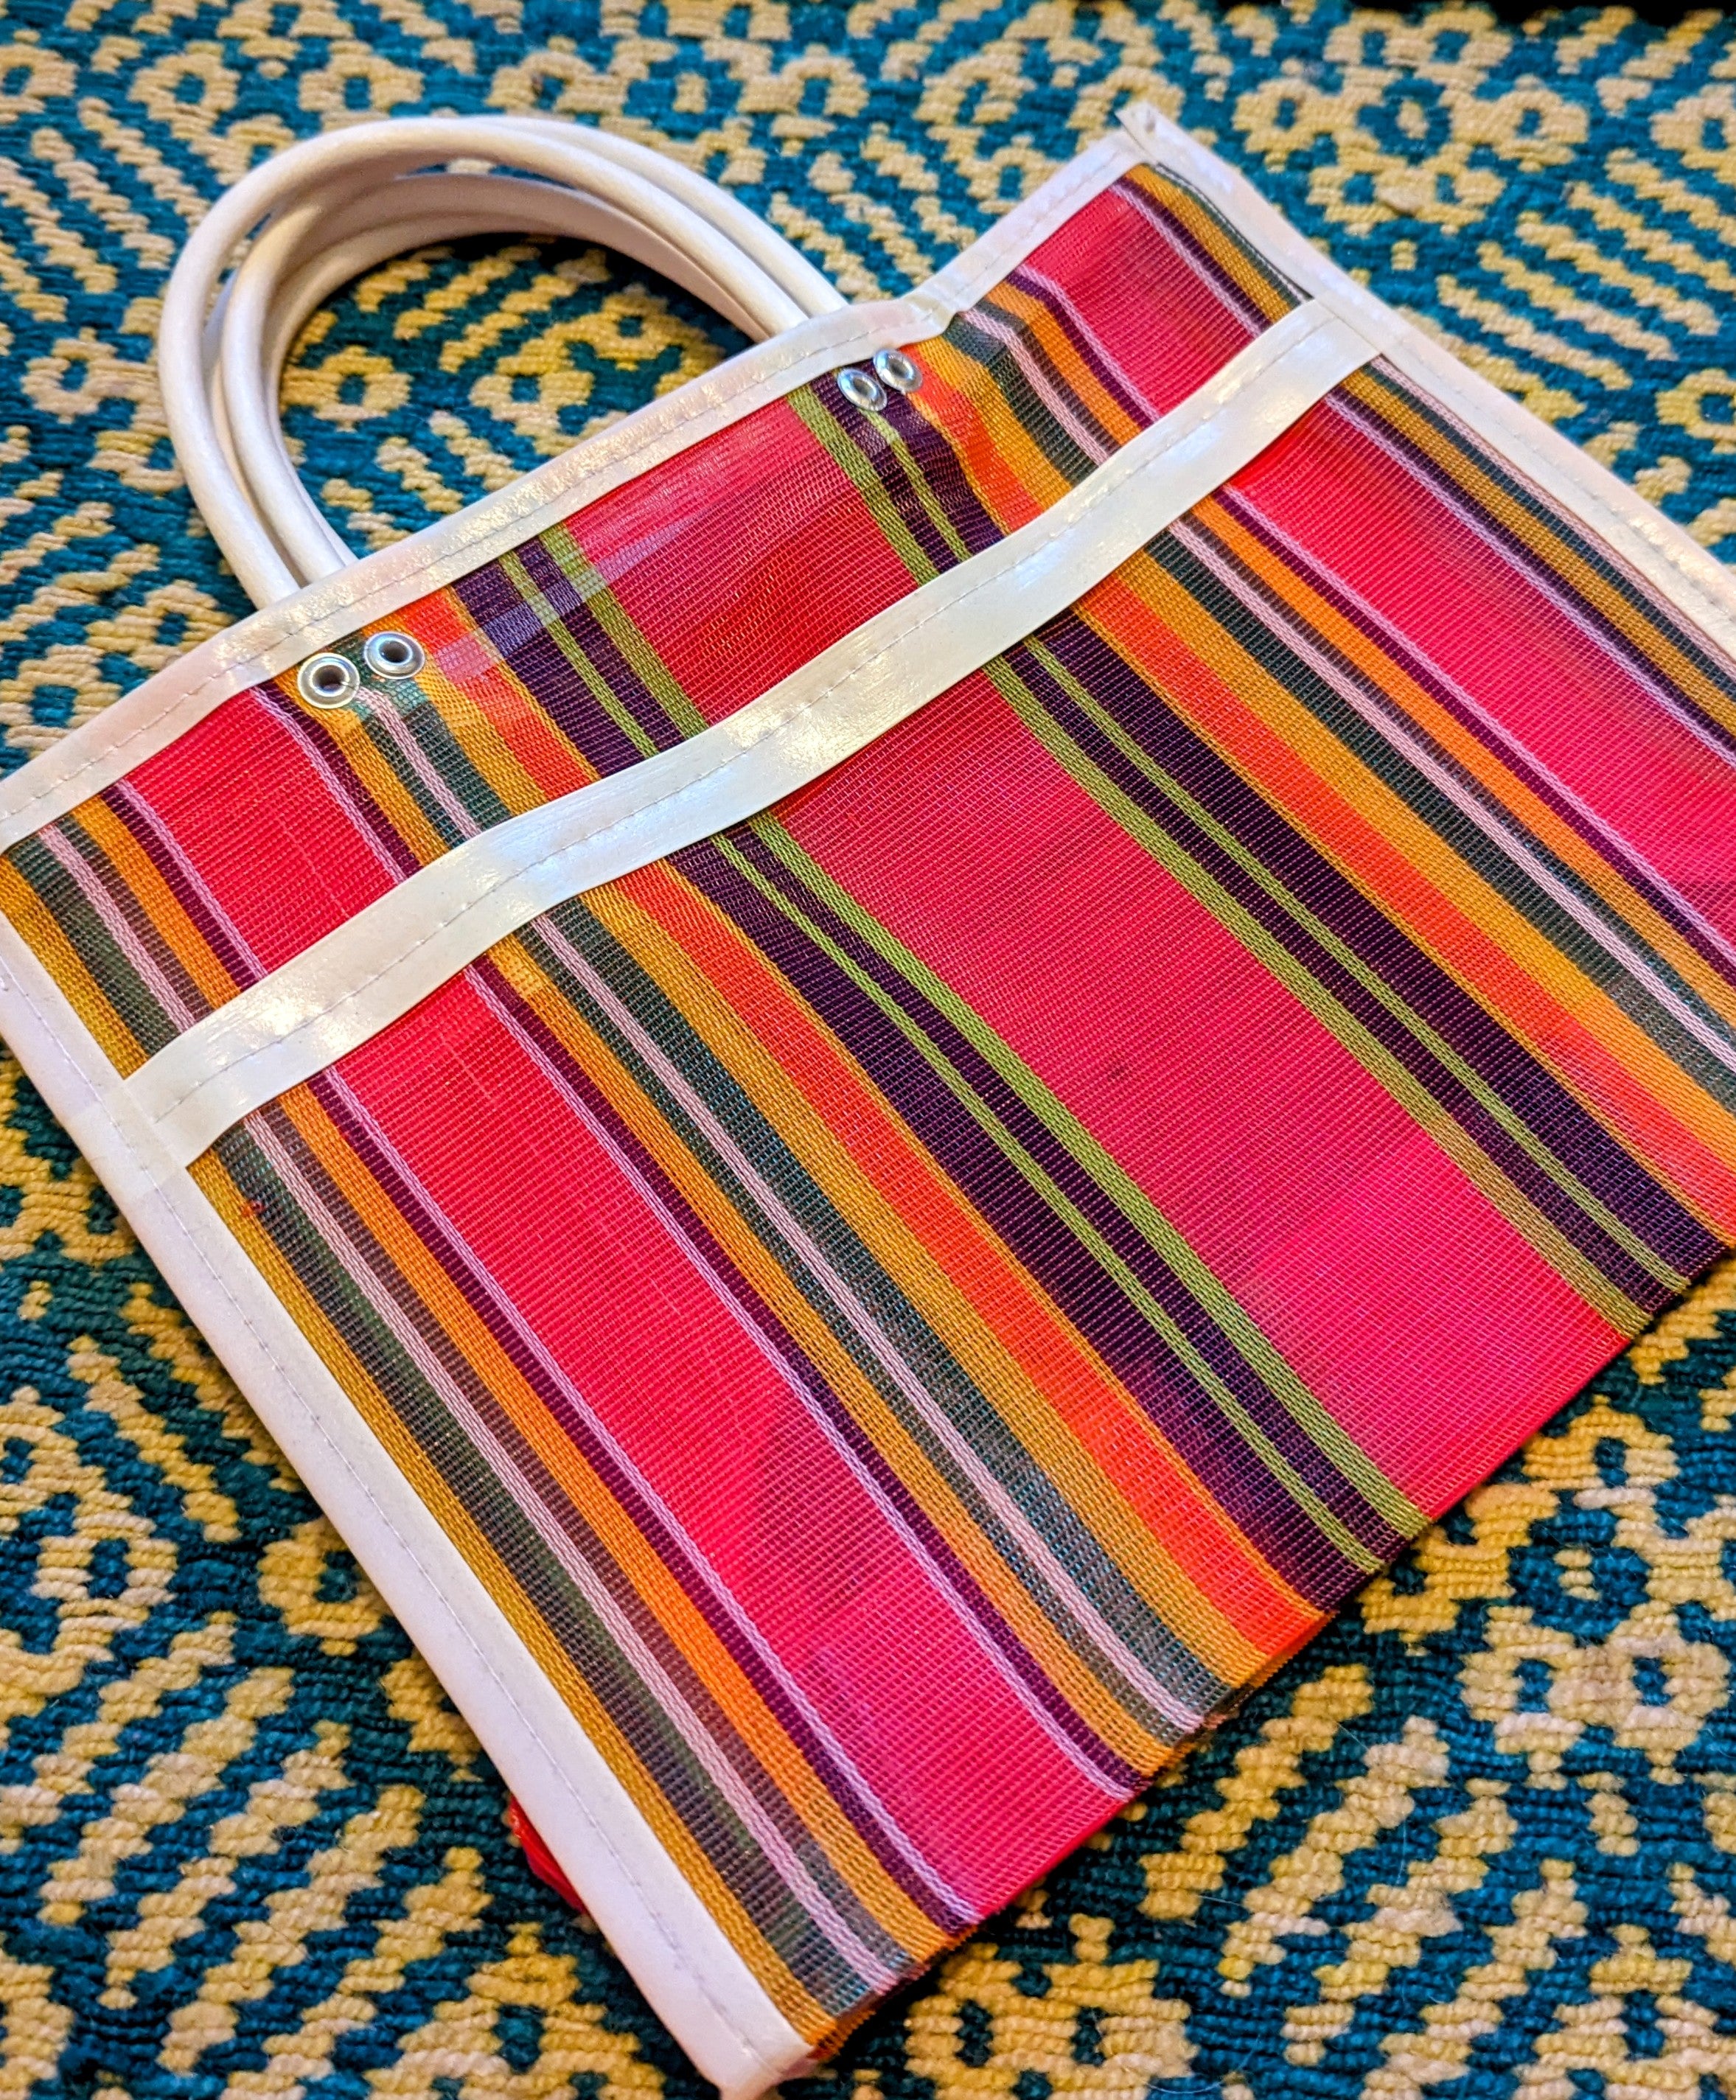 Mexican market bag - small